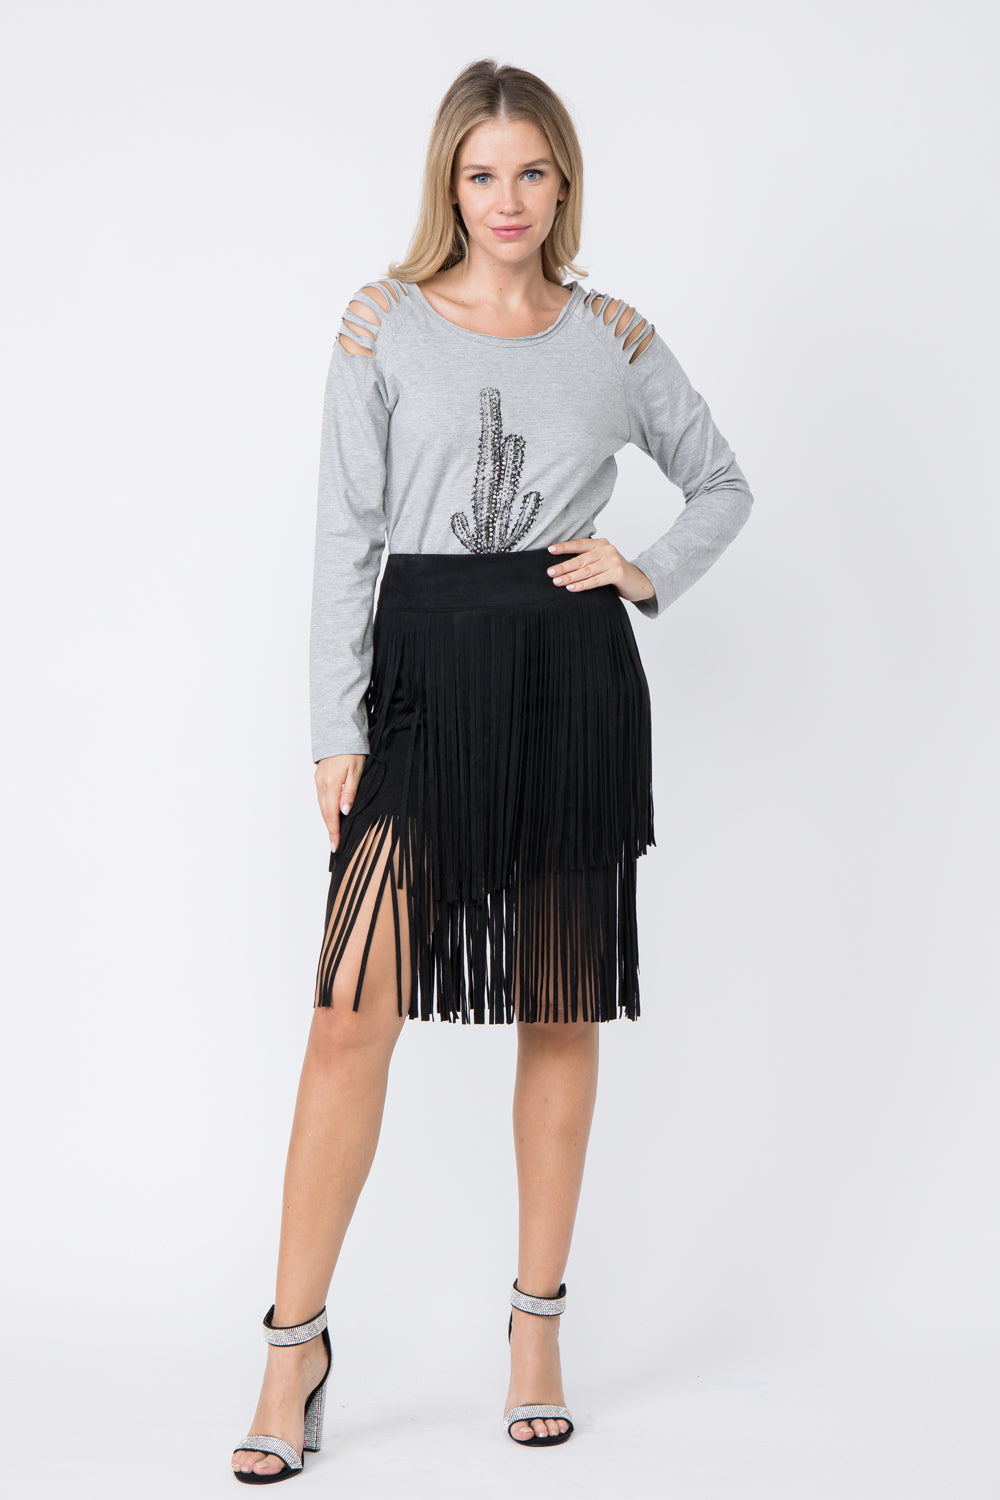 Black Suede Fringe Mini Skirt